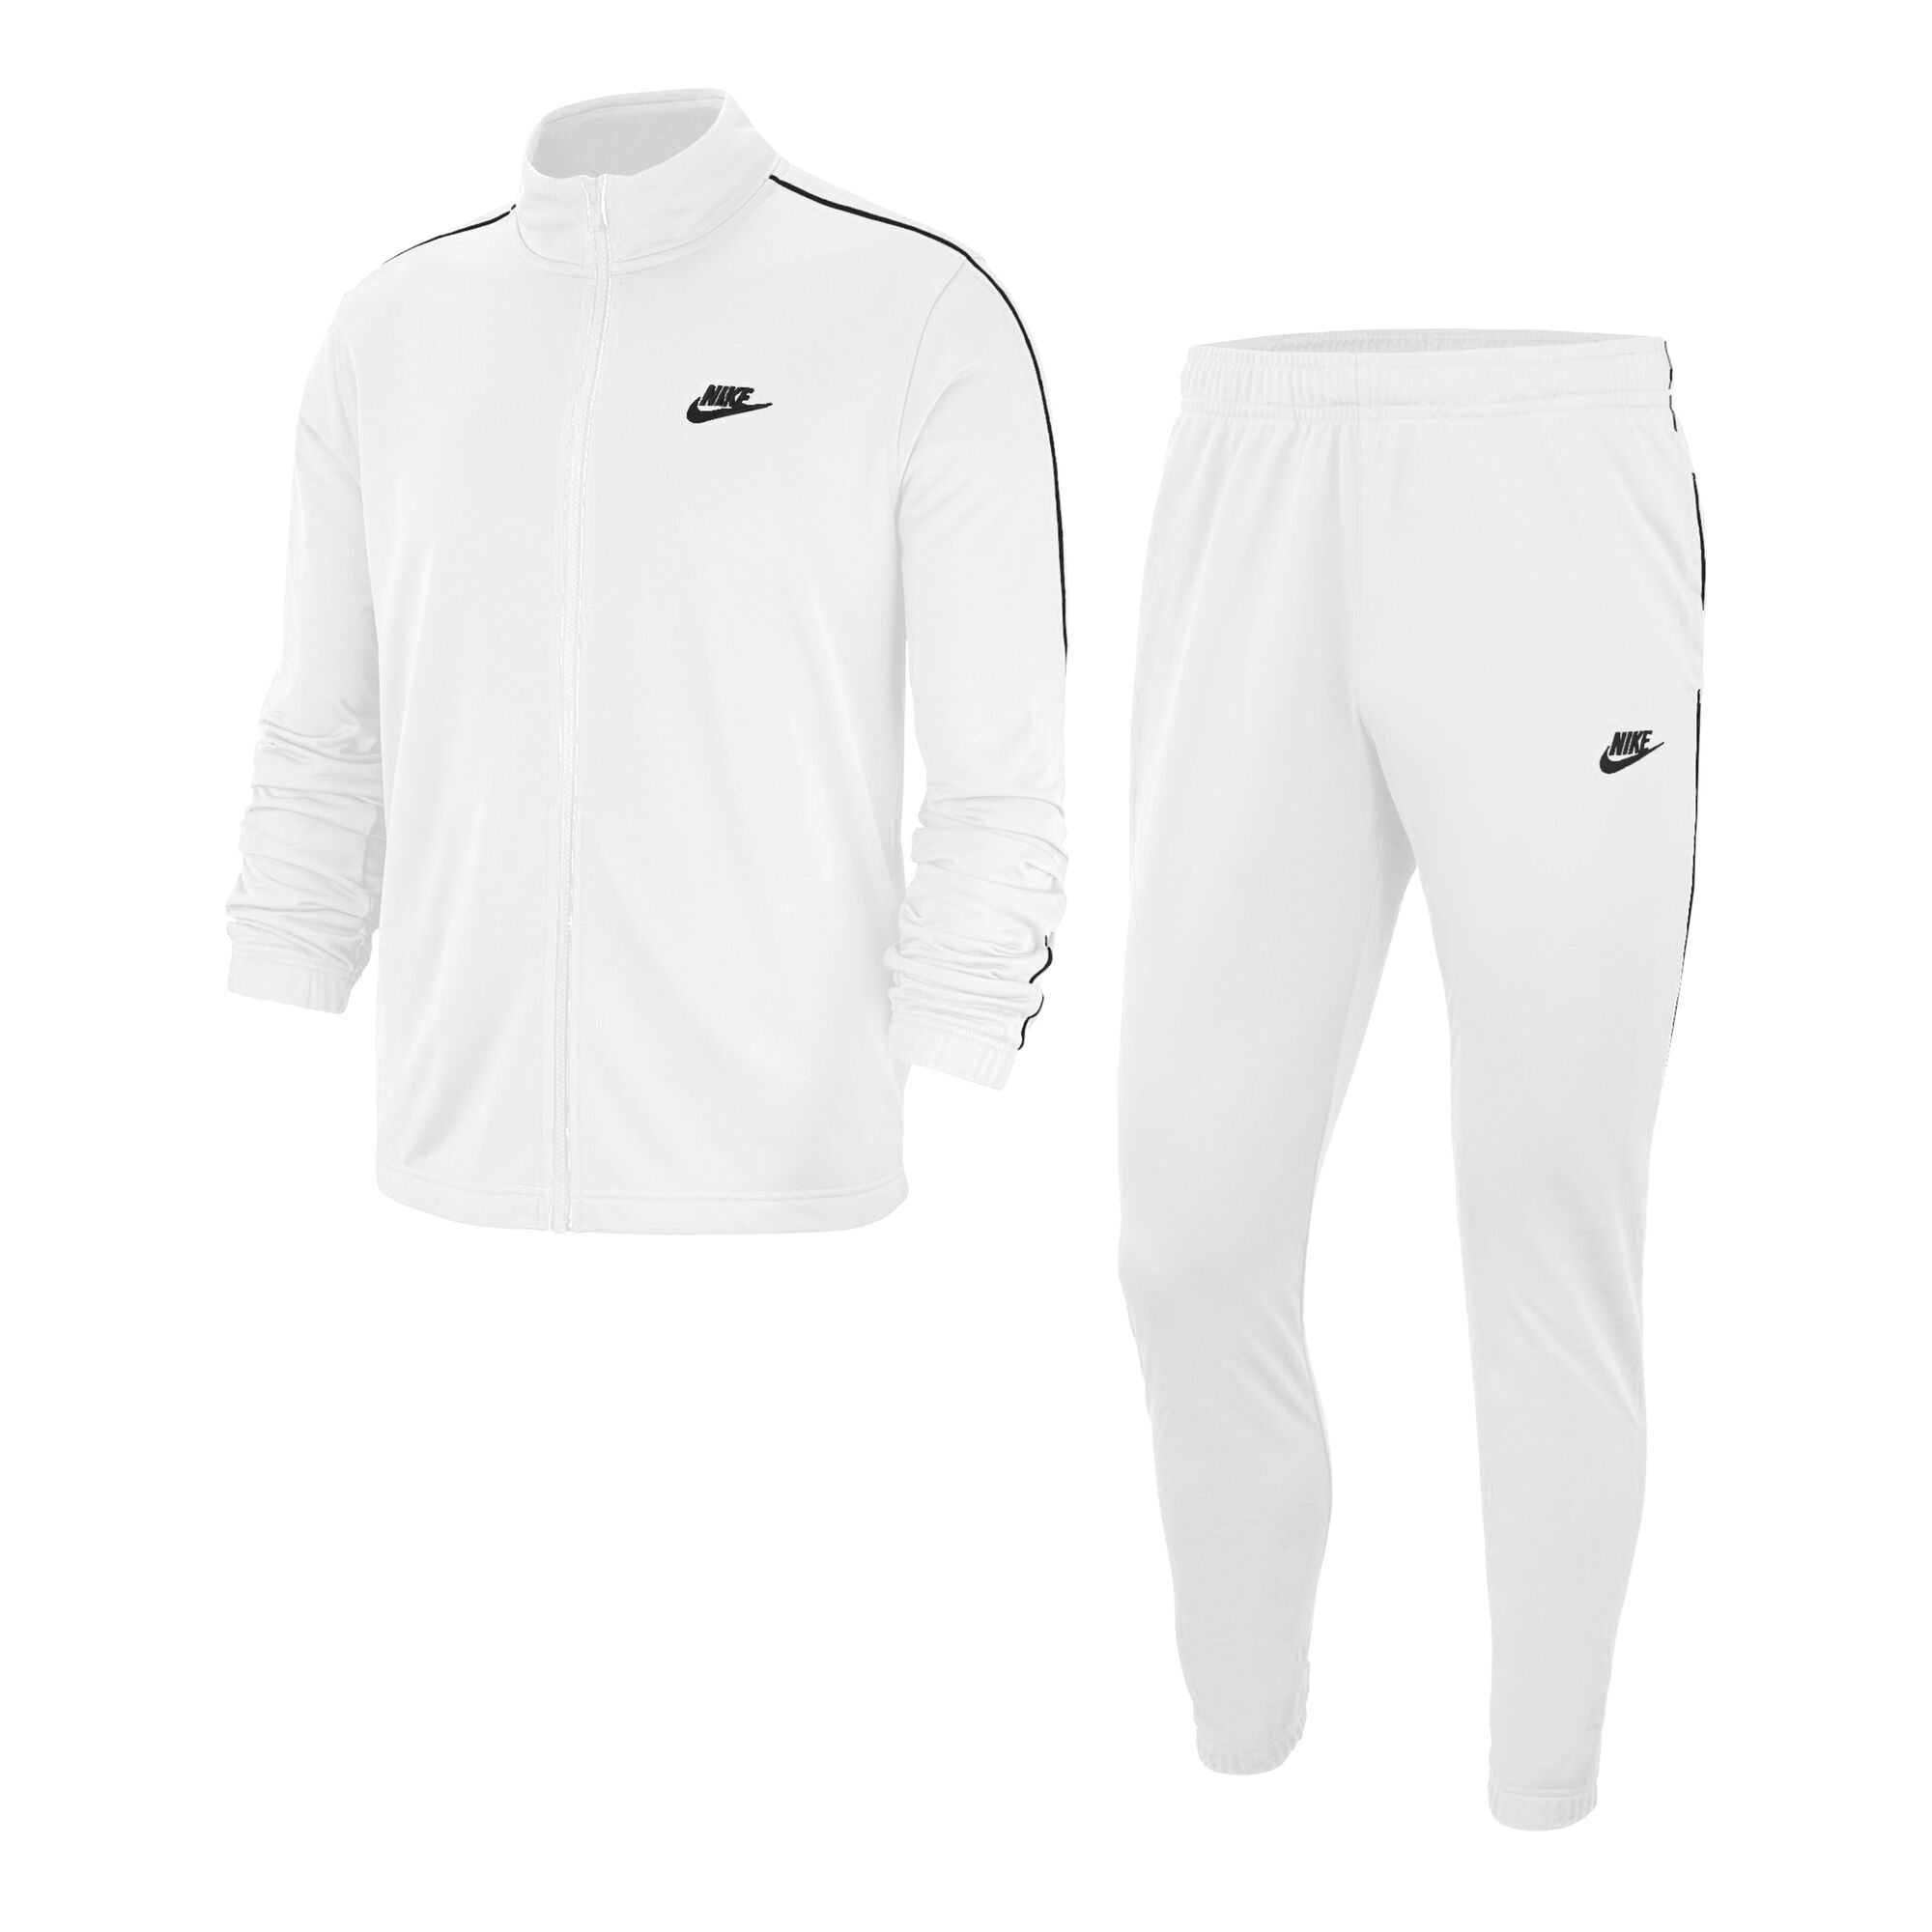 in plaats daarvan Kosten Stijgen buy Nike Sportswear Basic Tracksuit Men - White, Black online | Tennis-Point